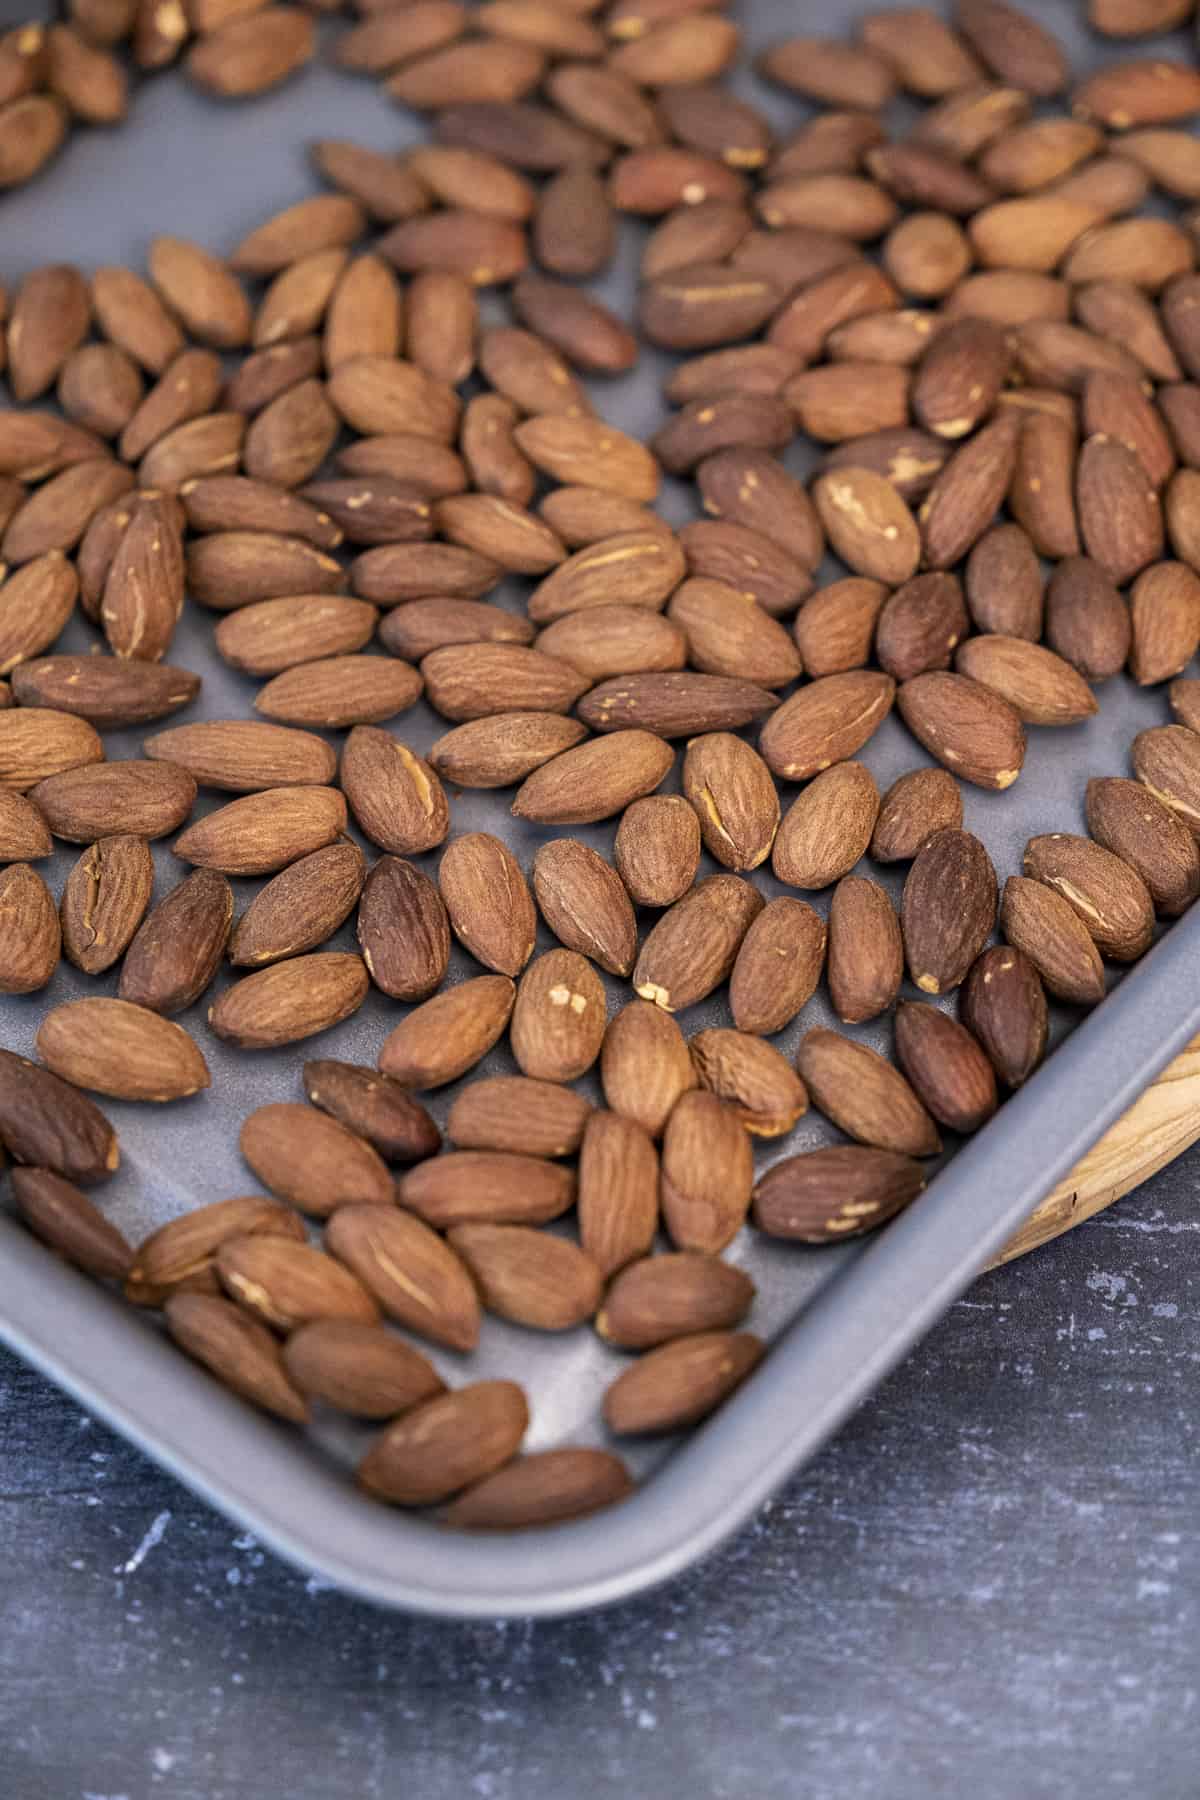 Roasted whole almonds on a baking sheet.